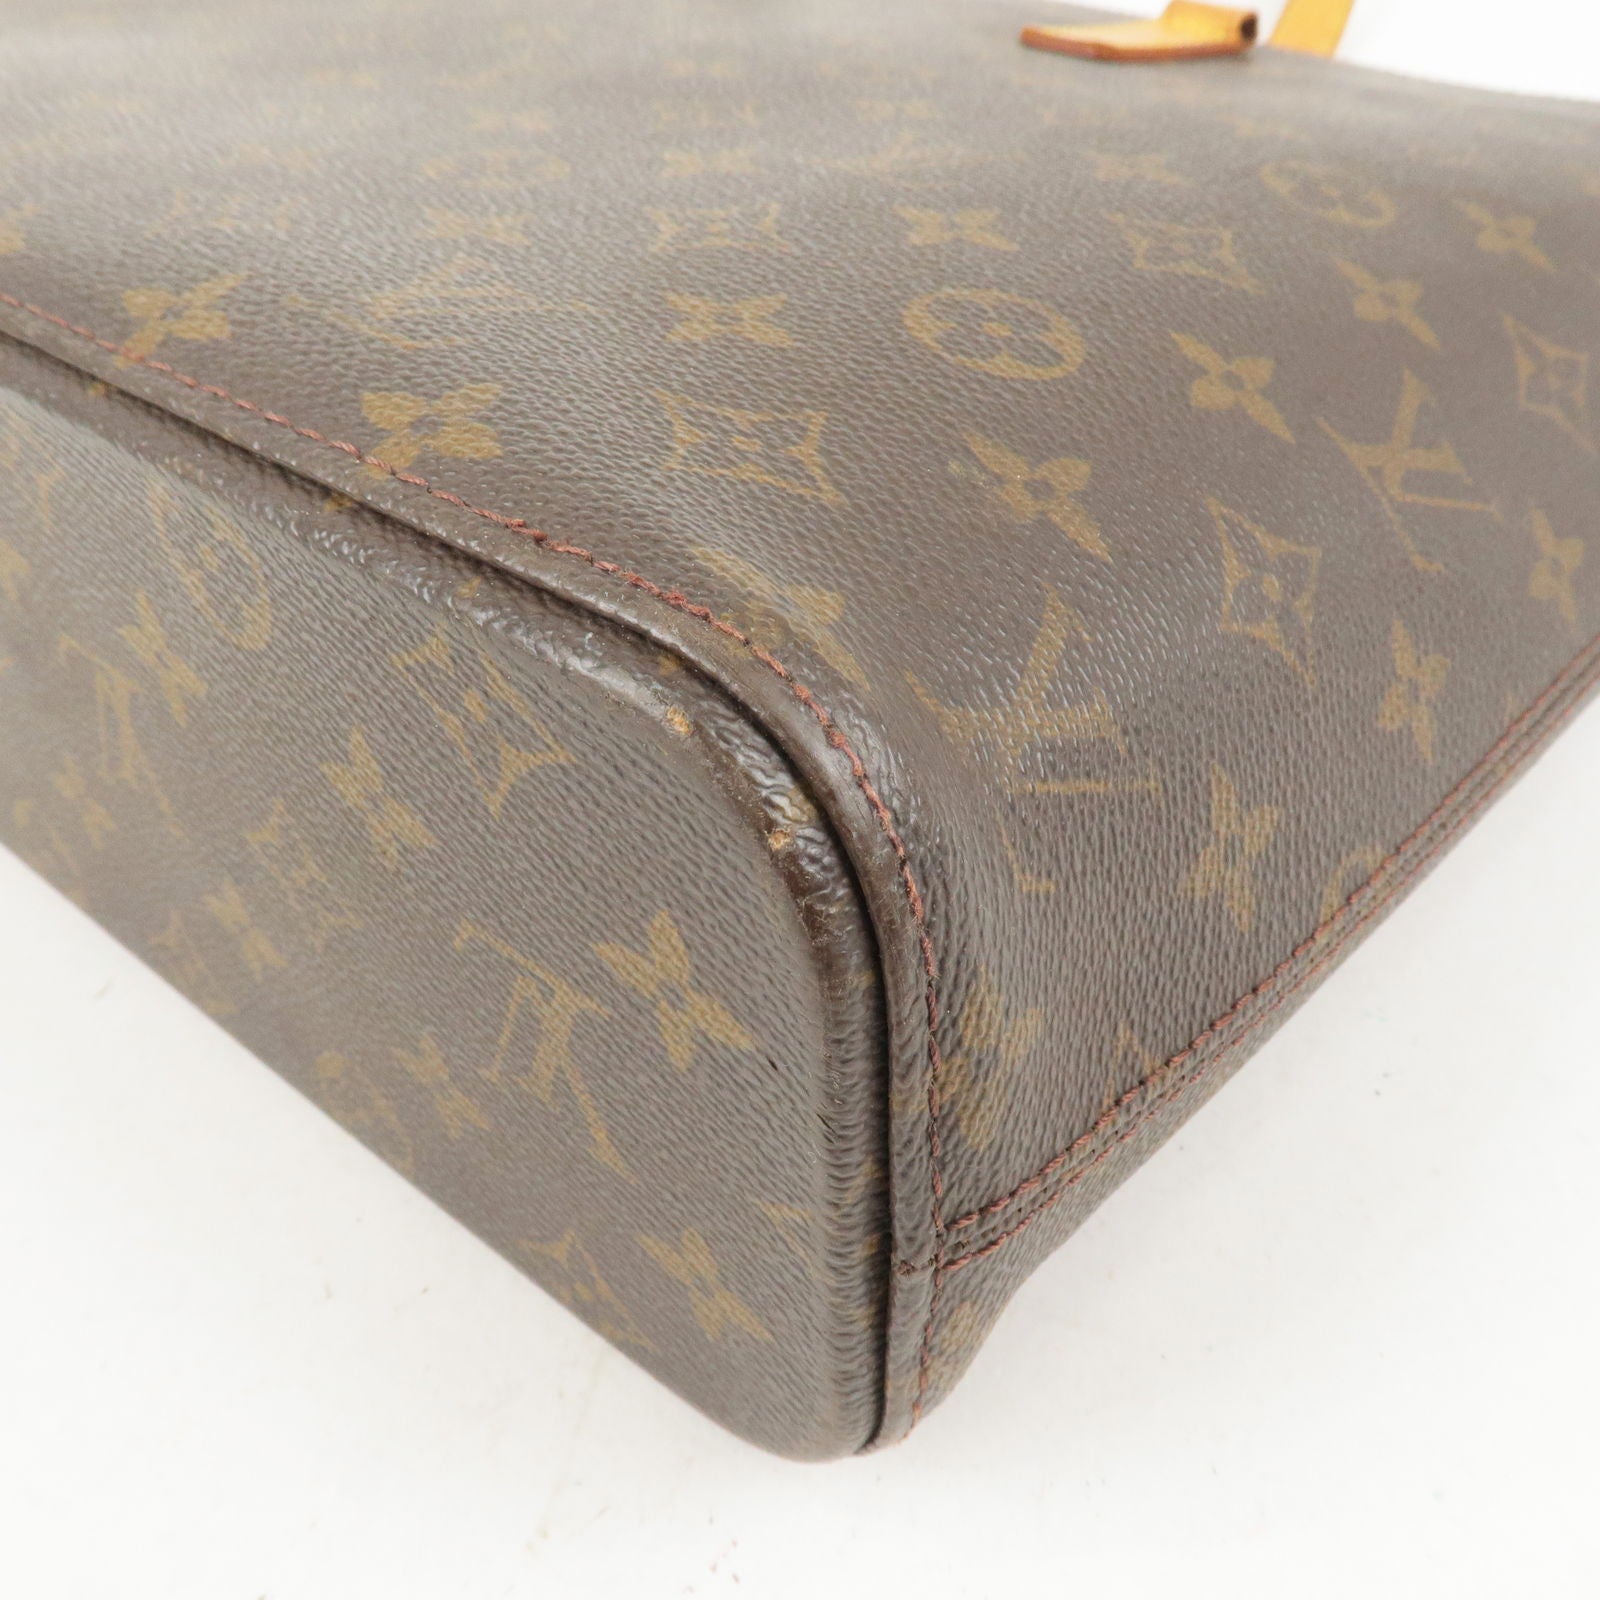 Louis Vuitton Lockit Handbag in Brown Monogram Canvas and Natural